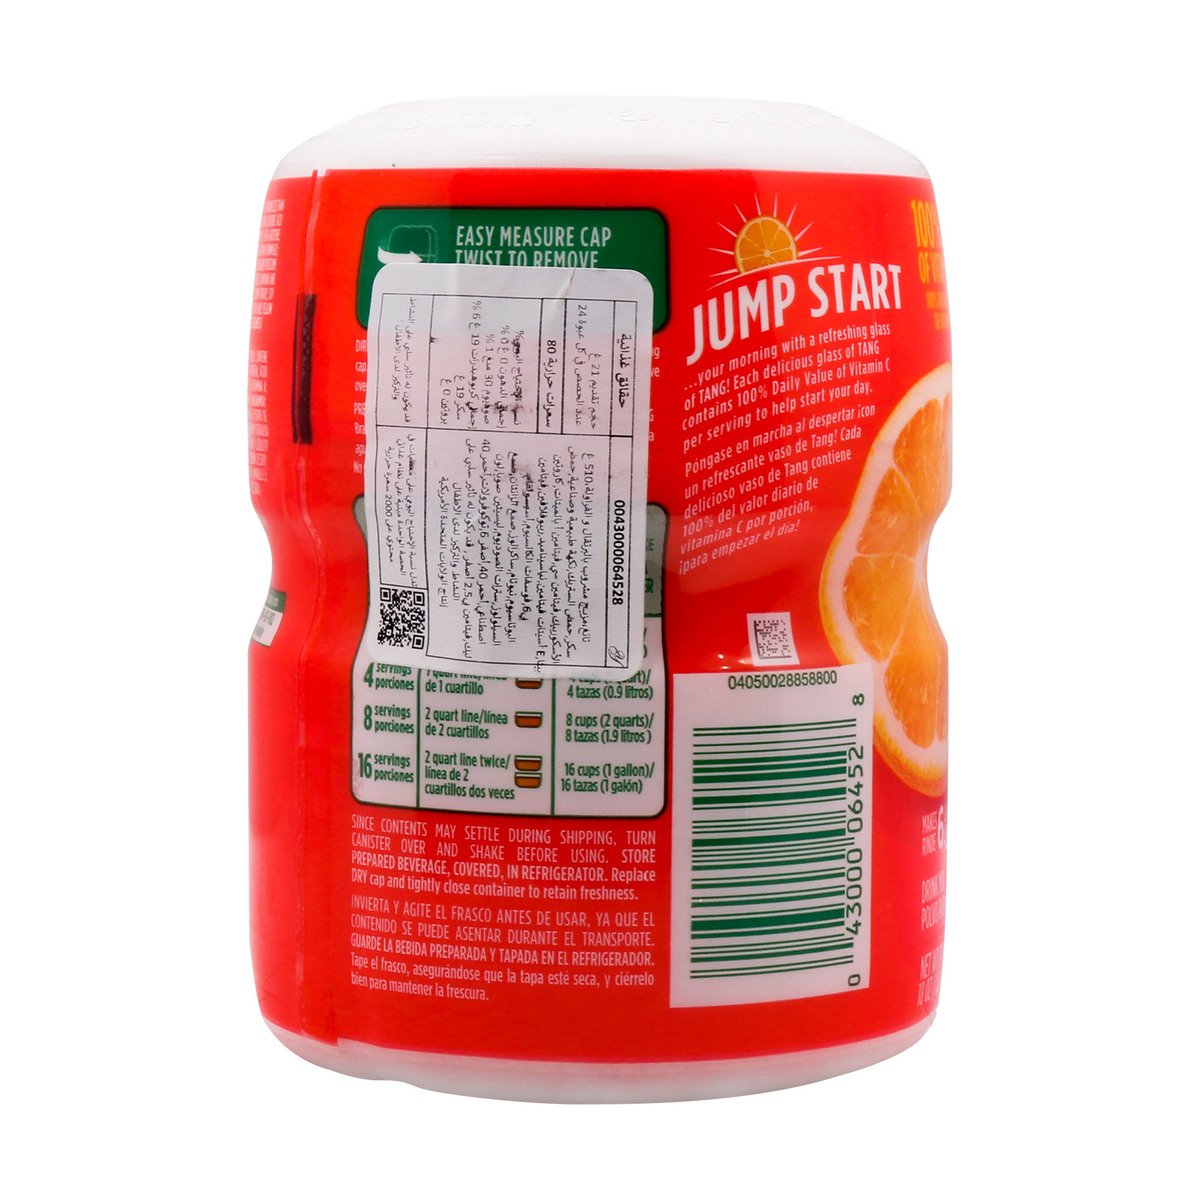 Tang Orange Strawberry Instant Powdered Drink 510 g